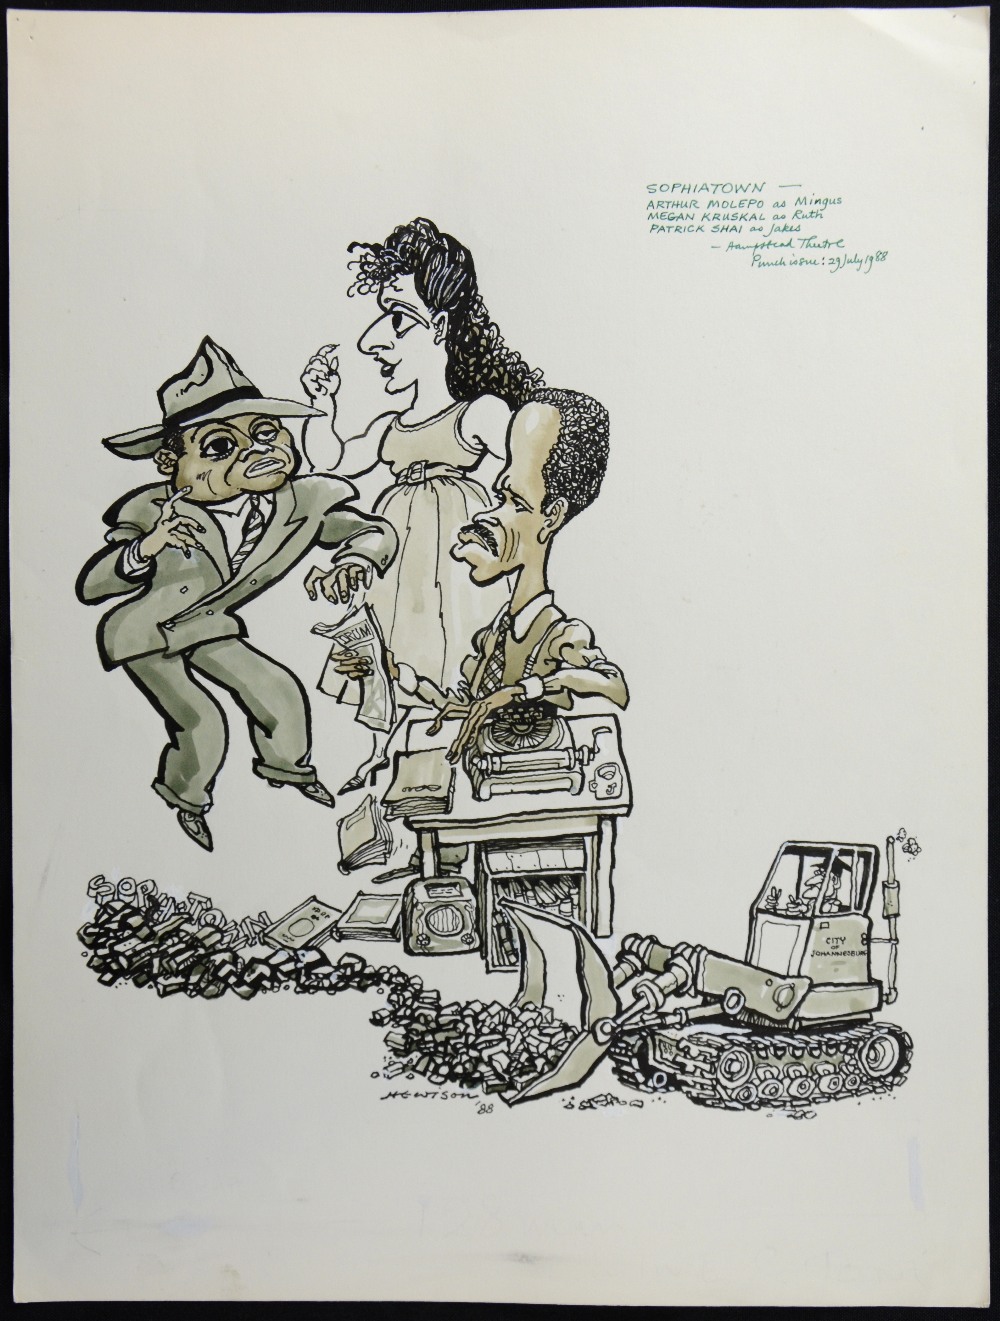 William Bill Hewison, original cartoon, Sophiatown, Hampstead, Punch 29 July 1988, Arthur Molepo,